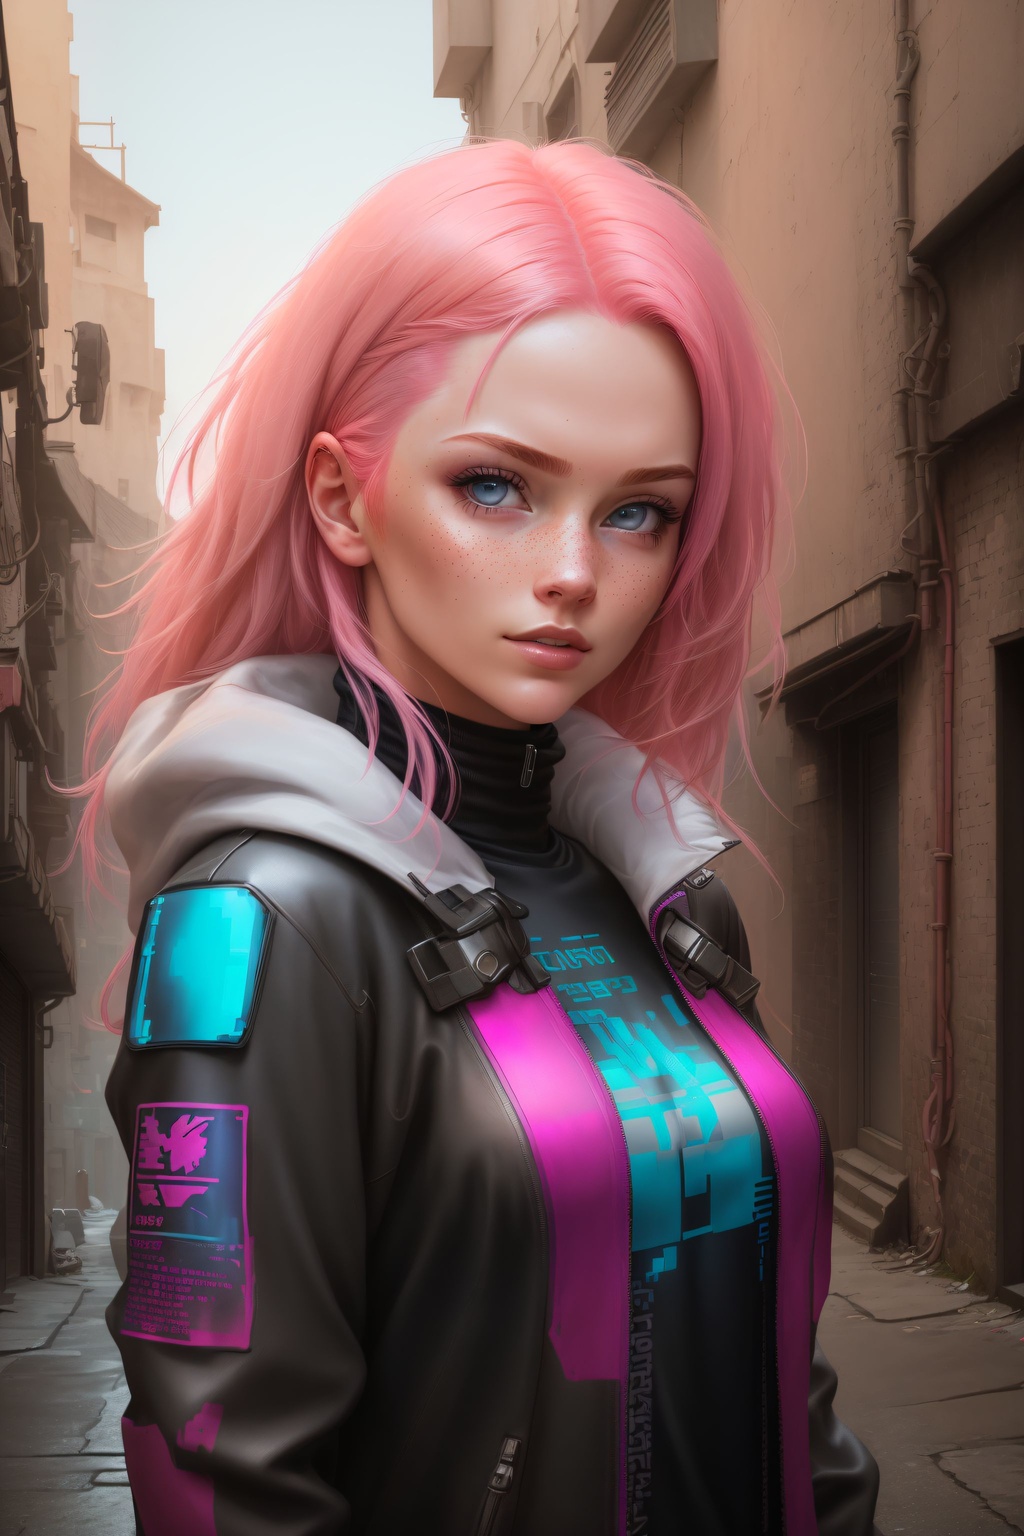 Cyberpunk girl with pink hair